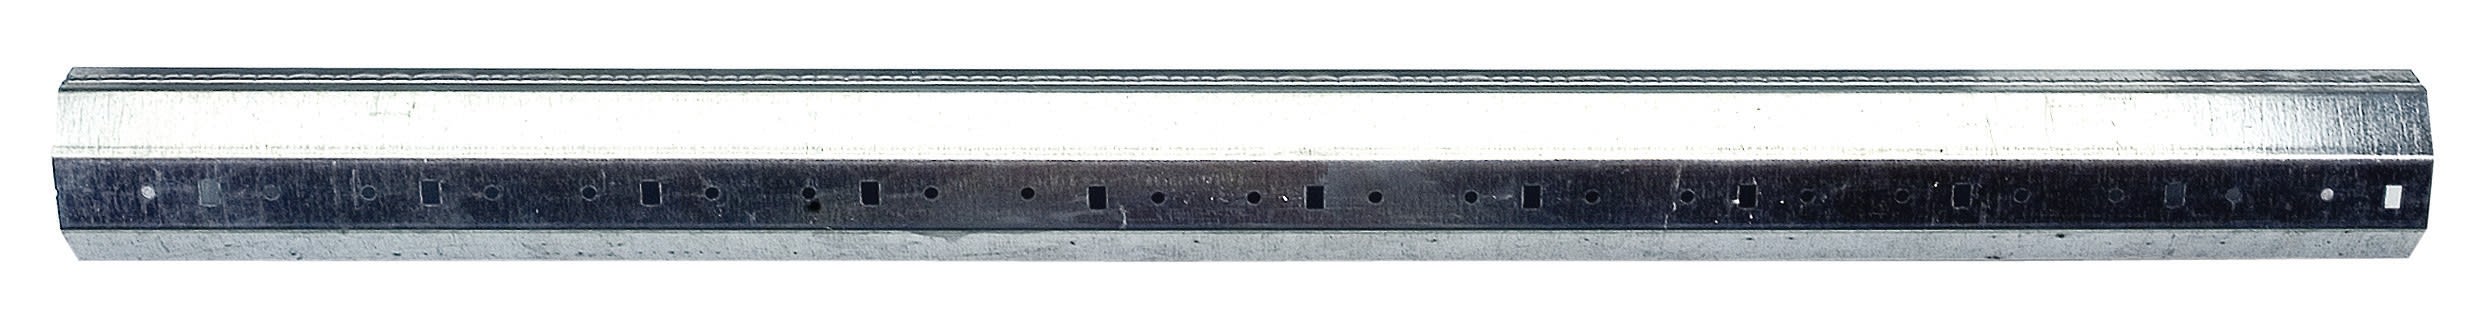 Faac - roll.tube octo60mm_l.3m_th.0,8mm